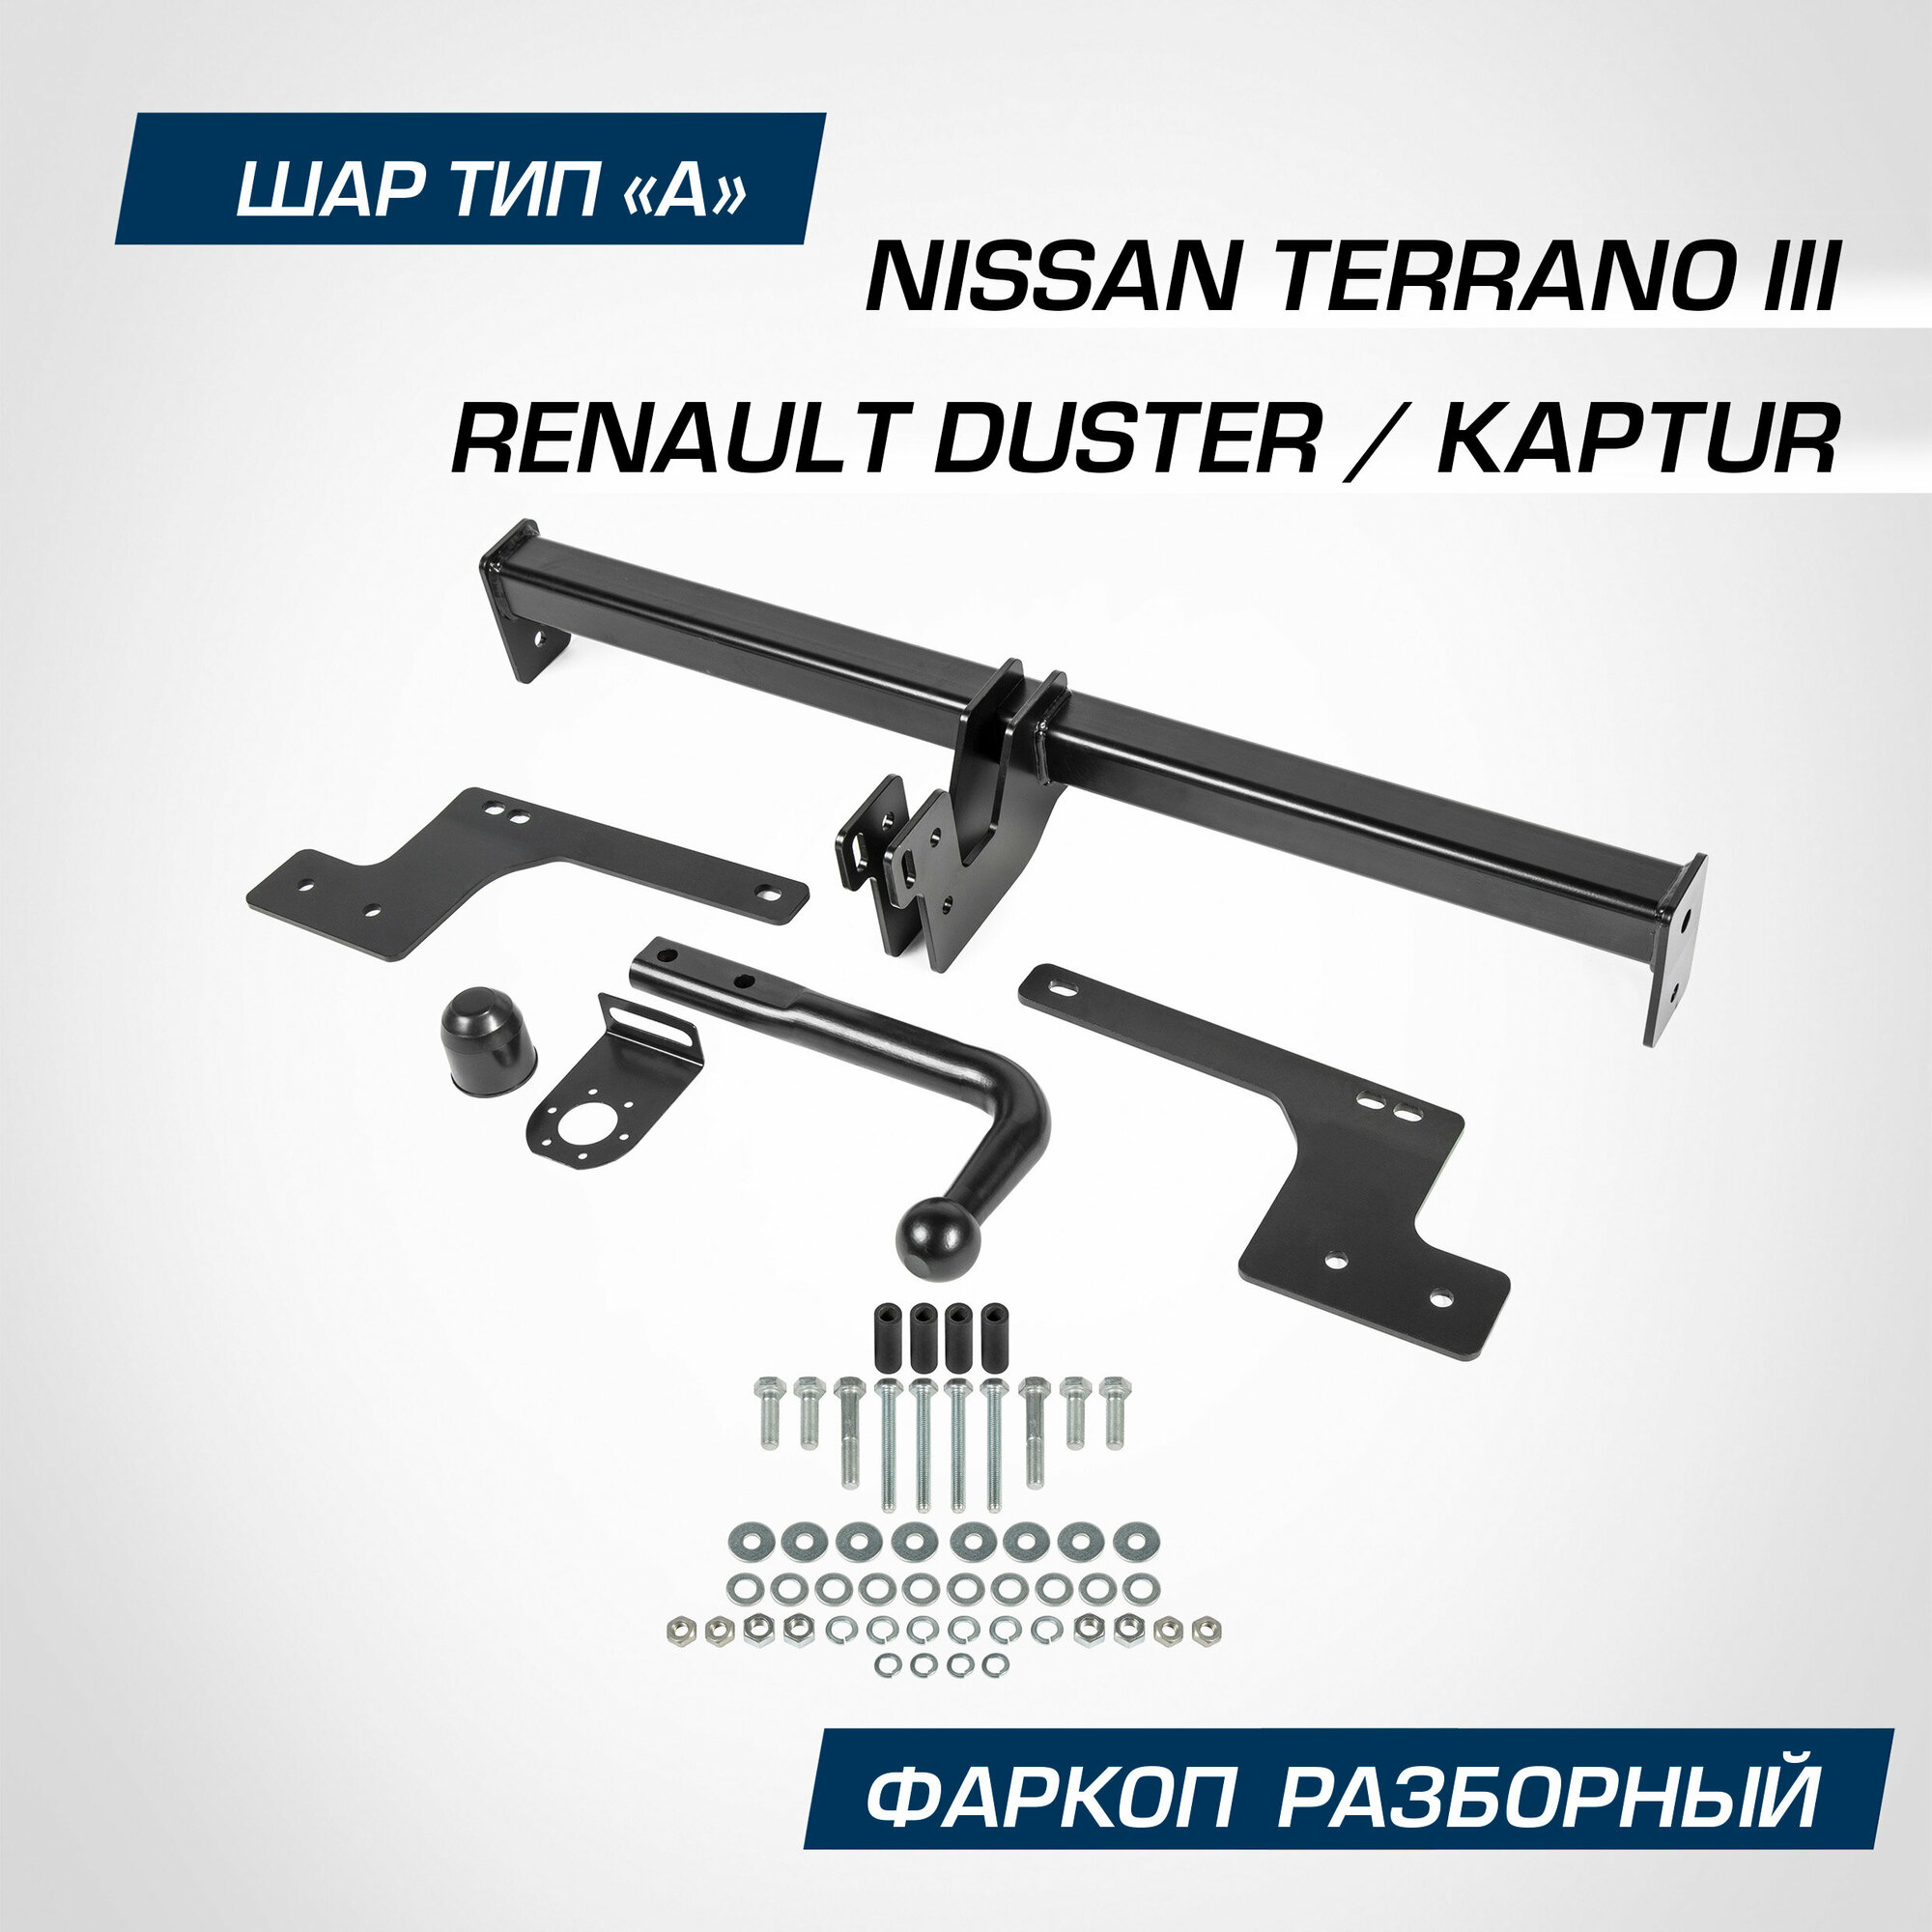 Фаркоп разборный Berg для Nissan Terrano III 2014-2017 2017-/Renault Duster I, II 2010-2021 2021-/Kaptur 2016-2020 2020-, шар A,1200/75 кг, F.4711.001